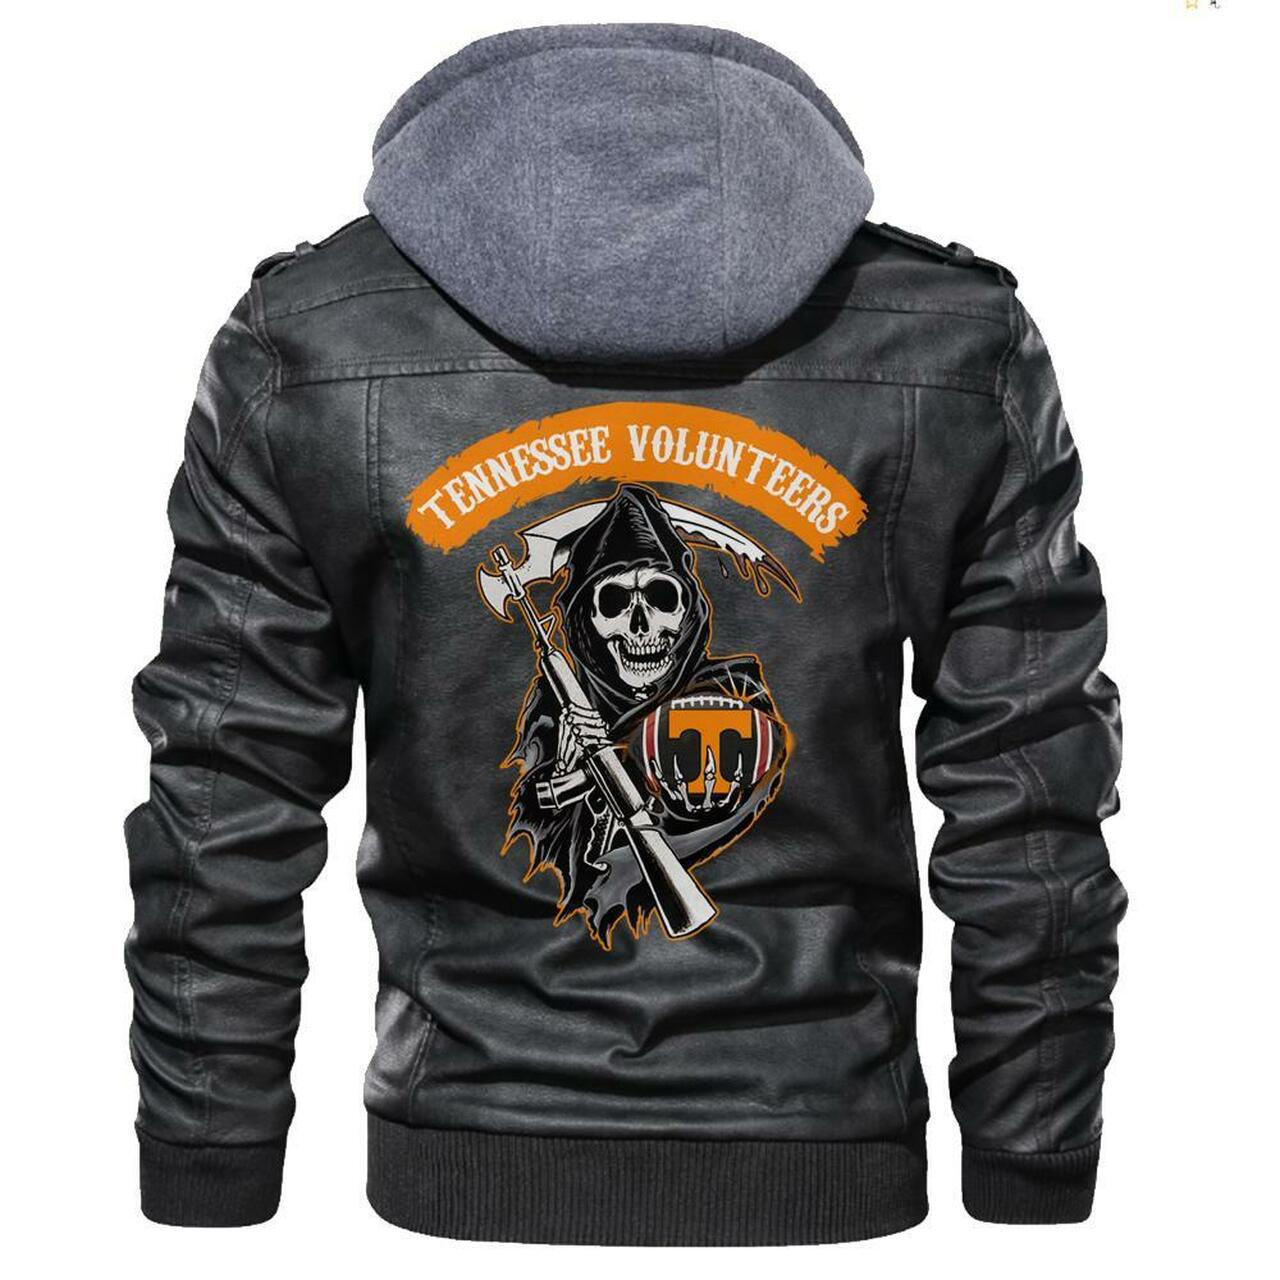 Top leather jacket Sells Best on Techcomshop 122